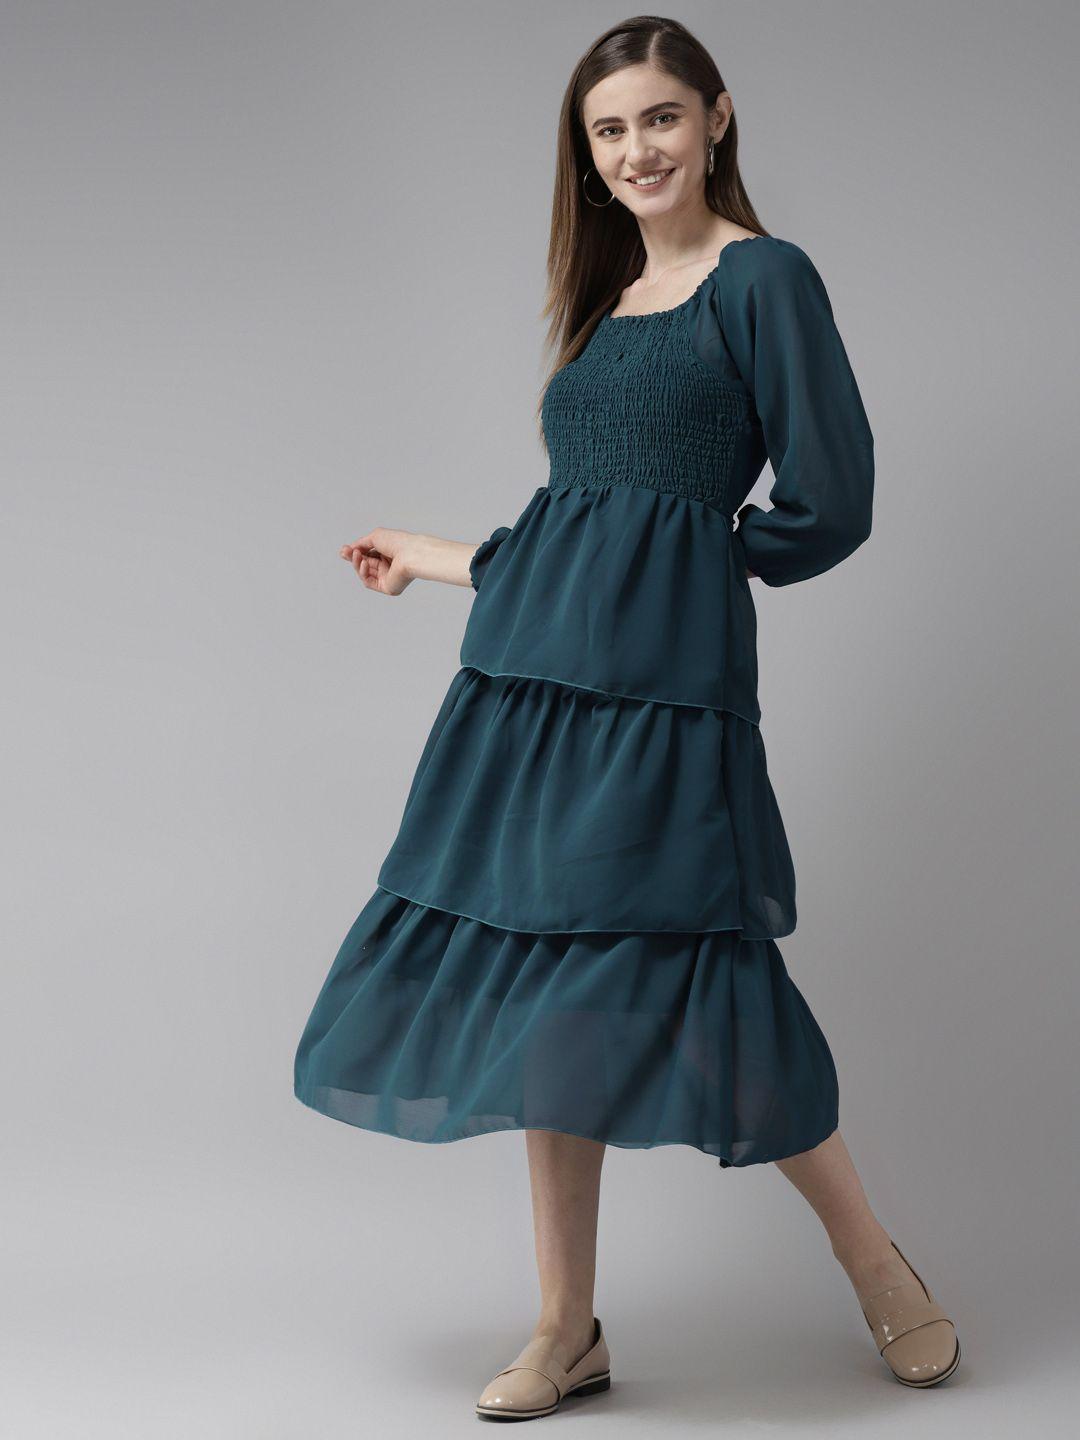 aarika-teal-green-solid-layered-georgette-a-line-midi-dress